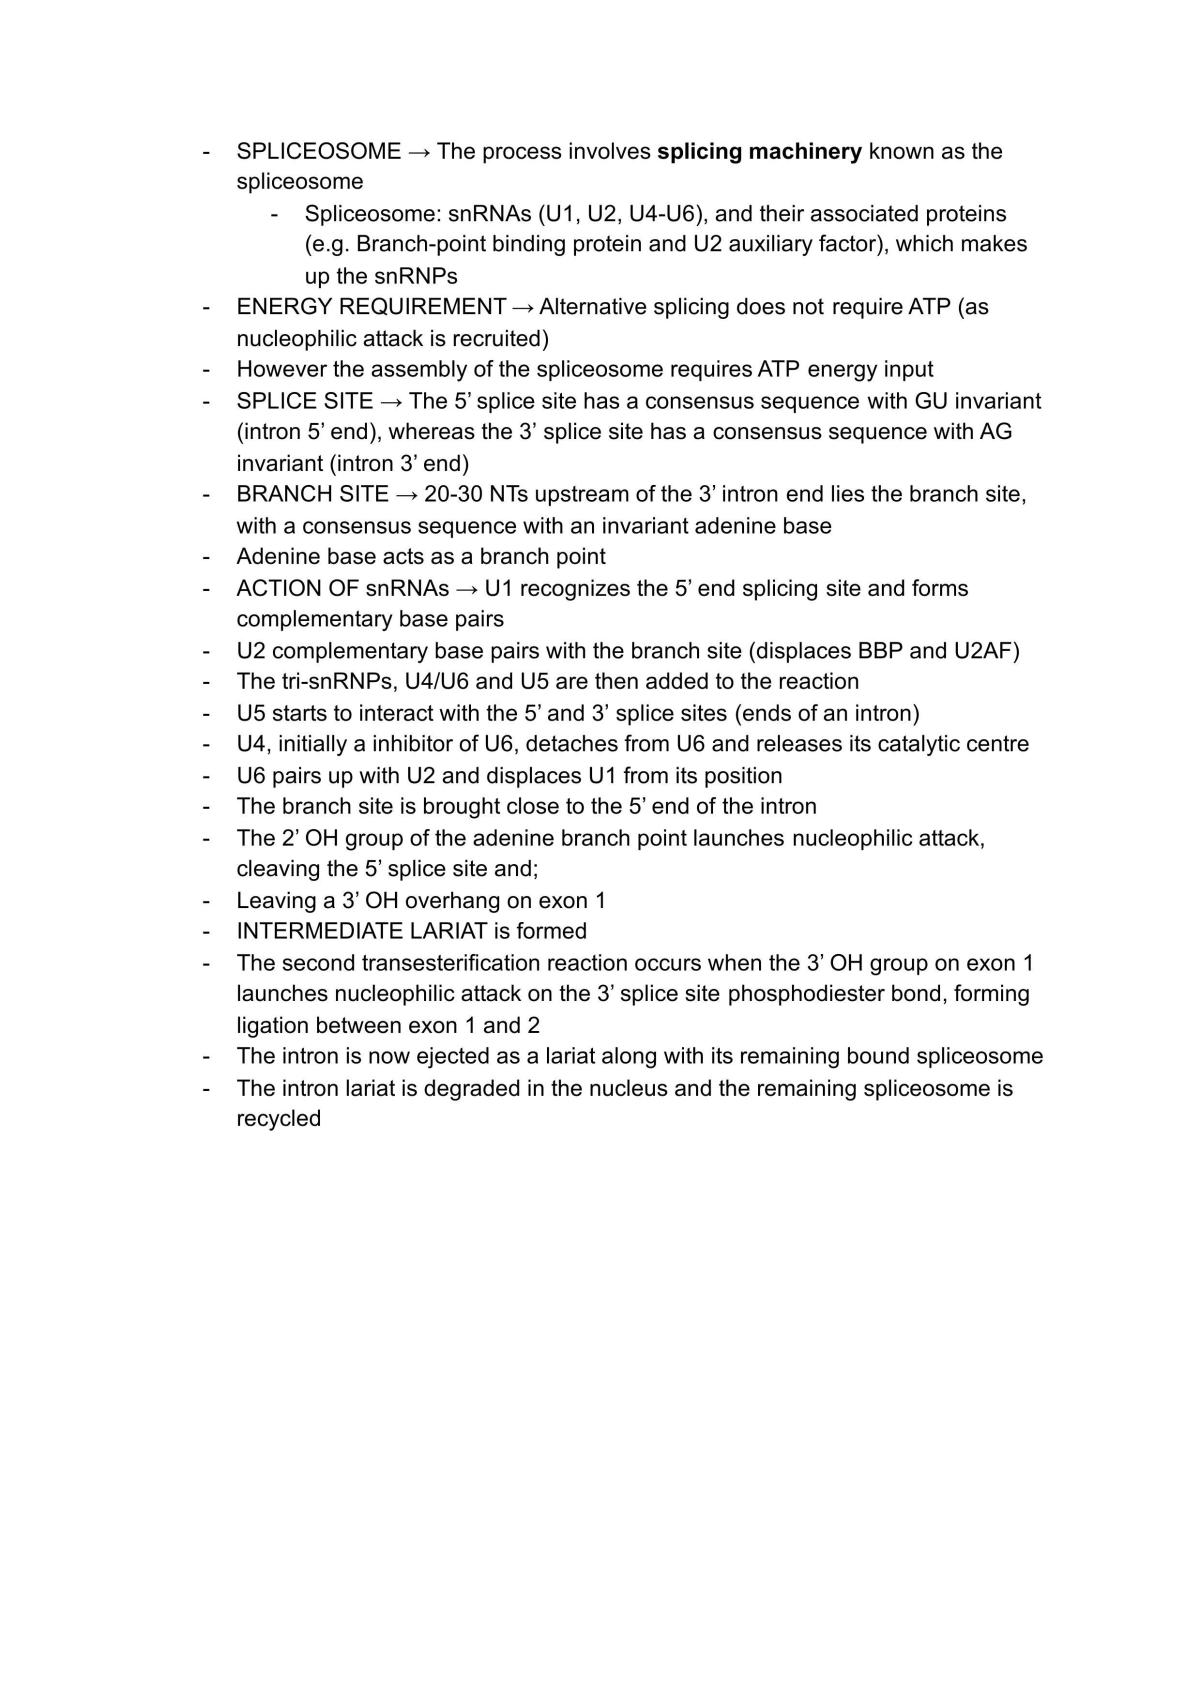 BIOC0007 Revision Notes - Page 23